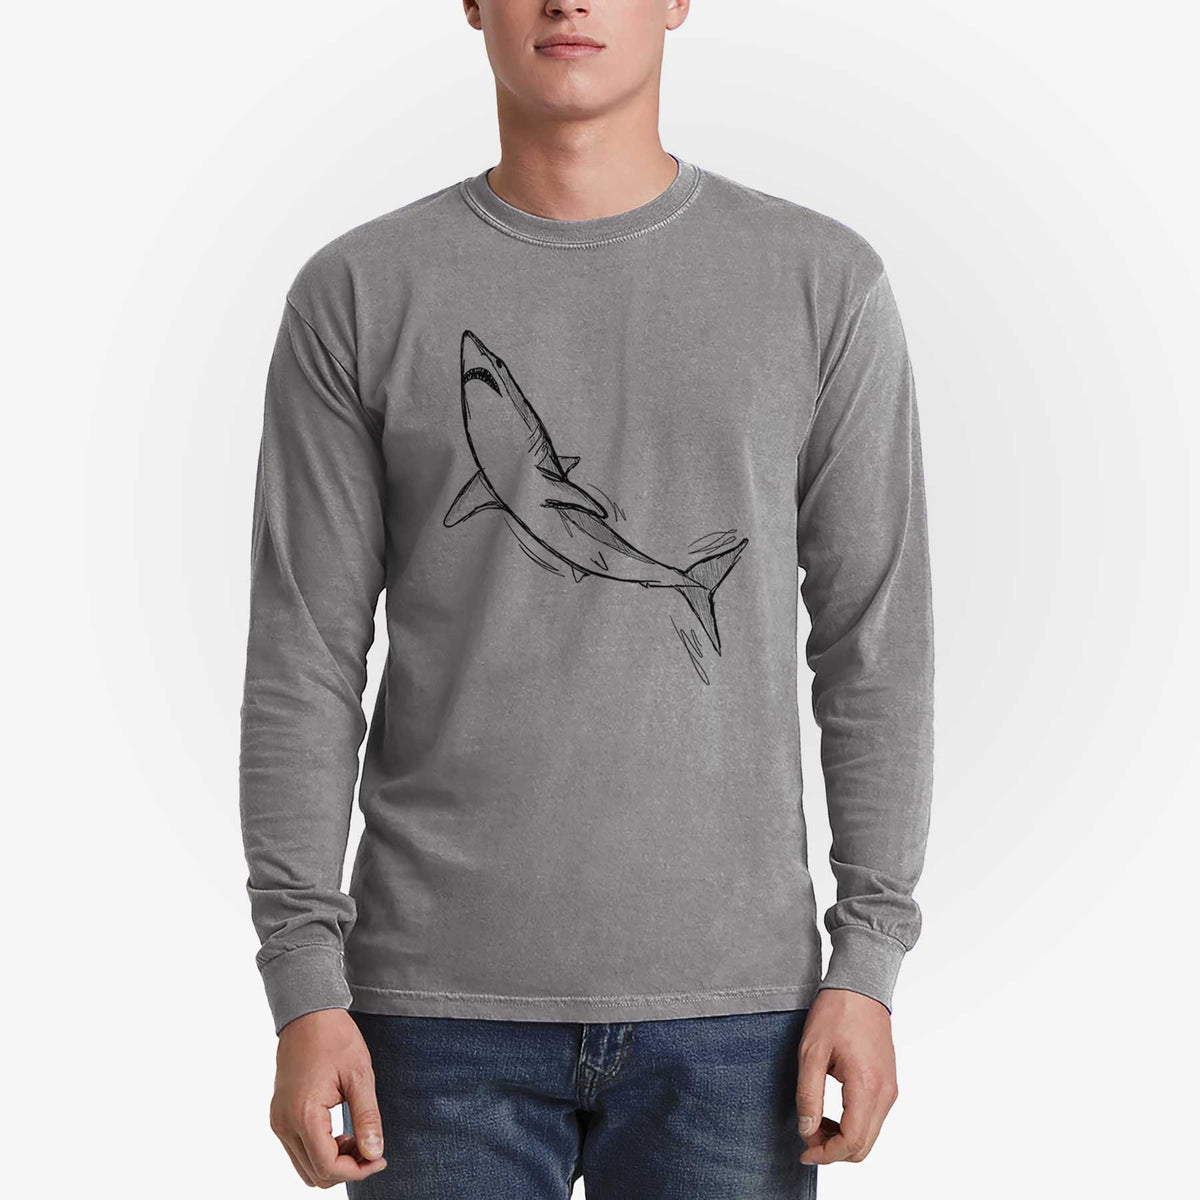 Shortfin Mako Shark - Heavyweight 100% Cotton Long Sleeve